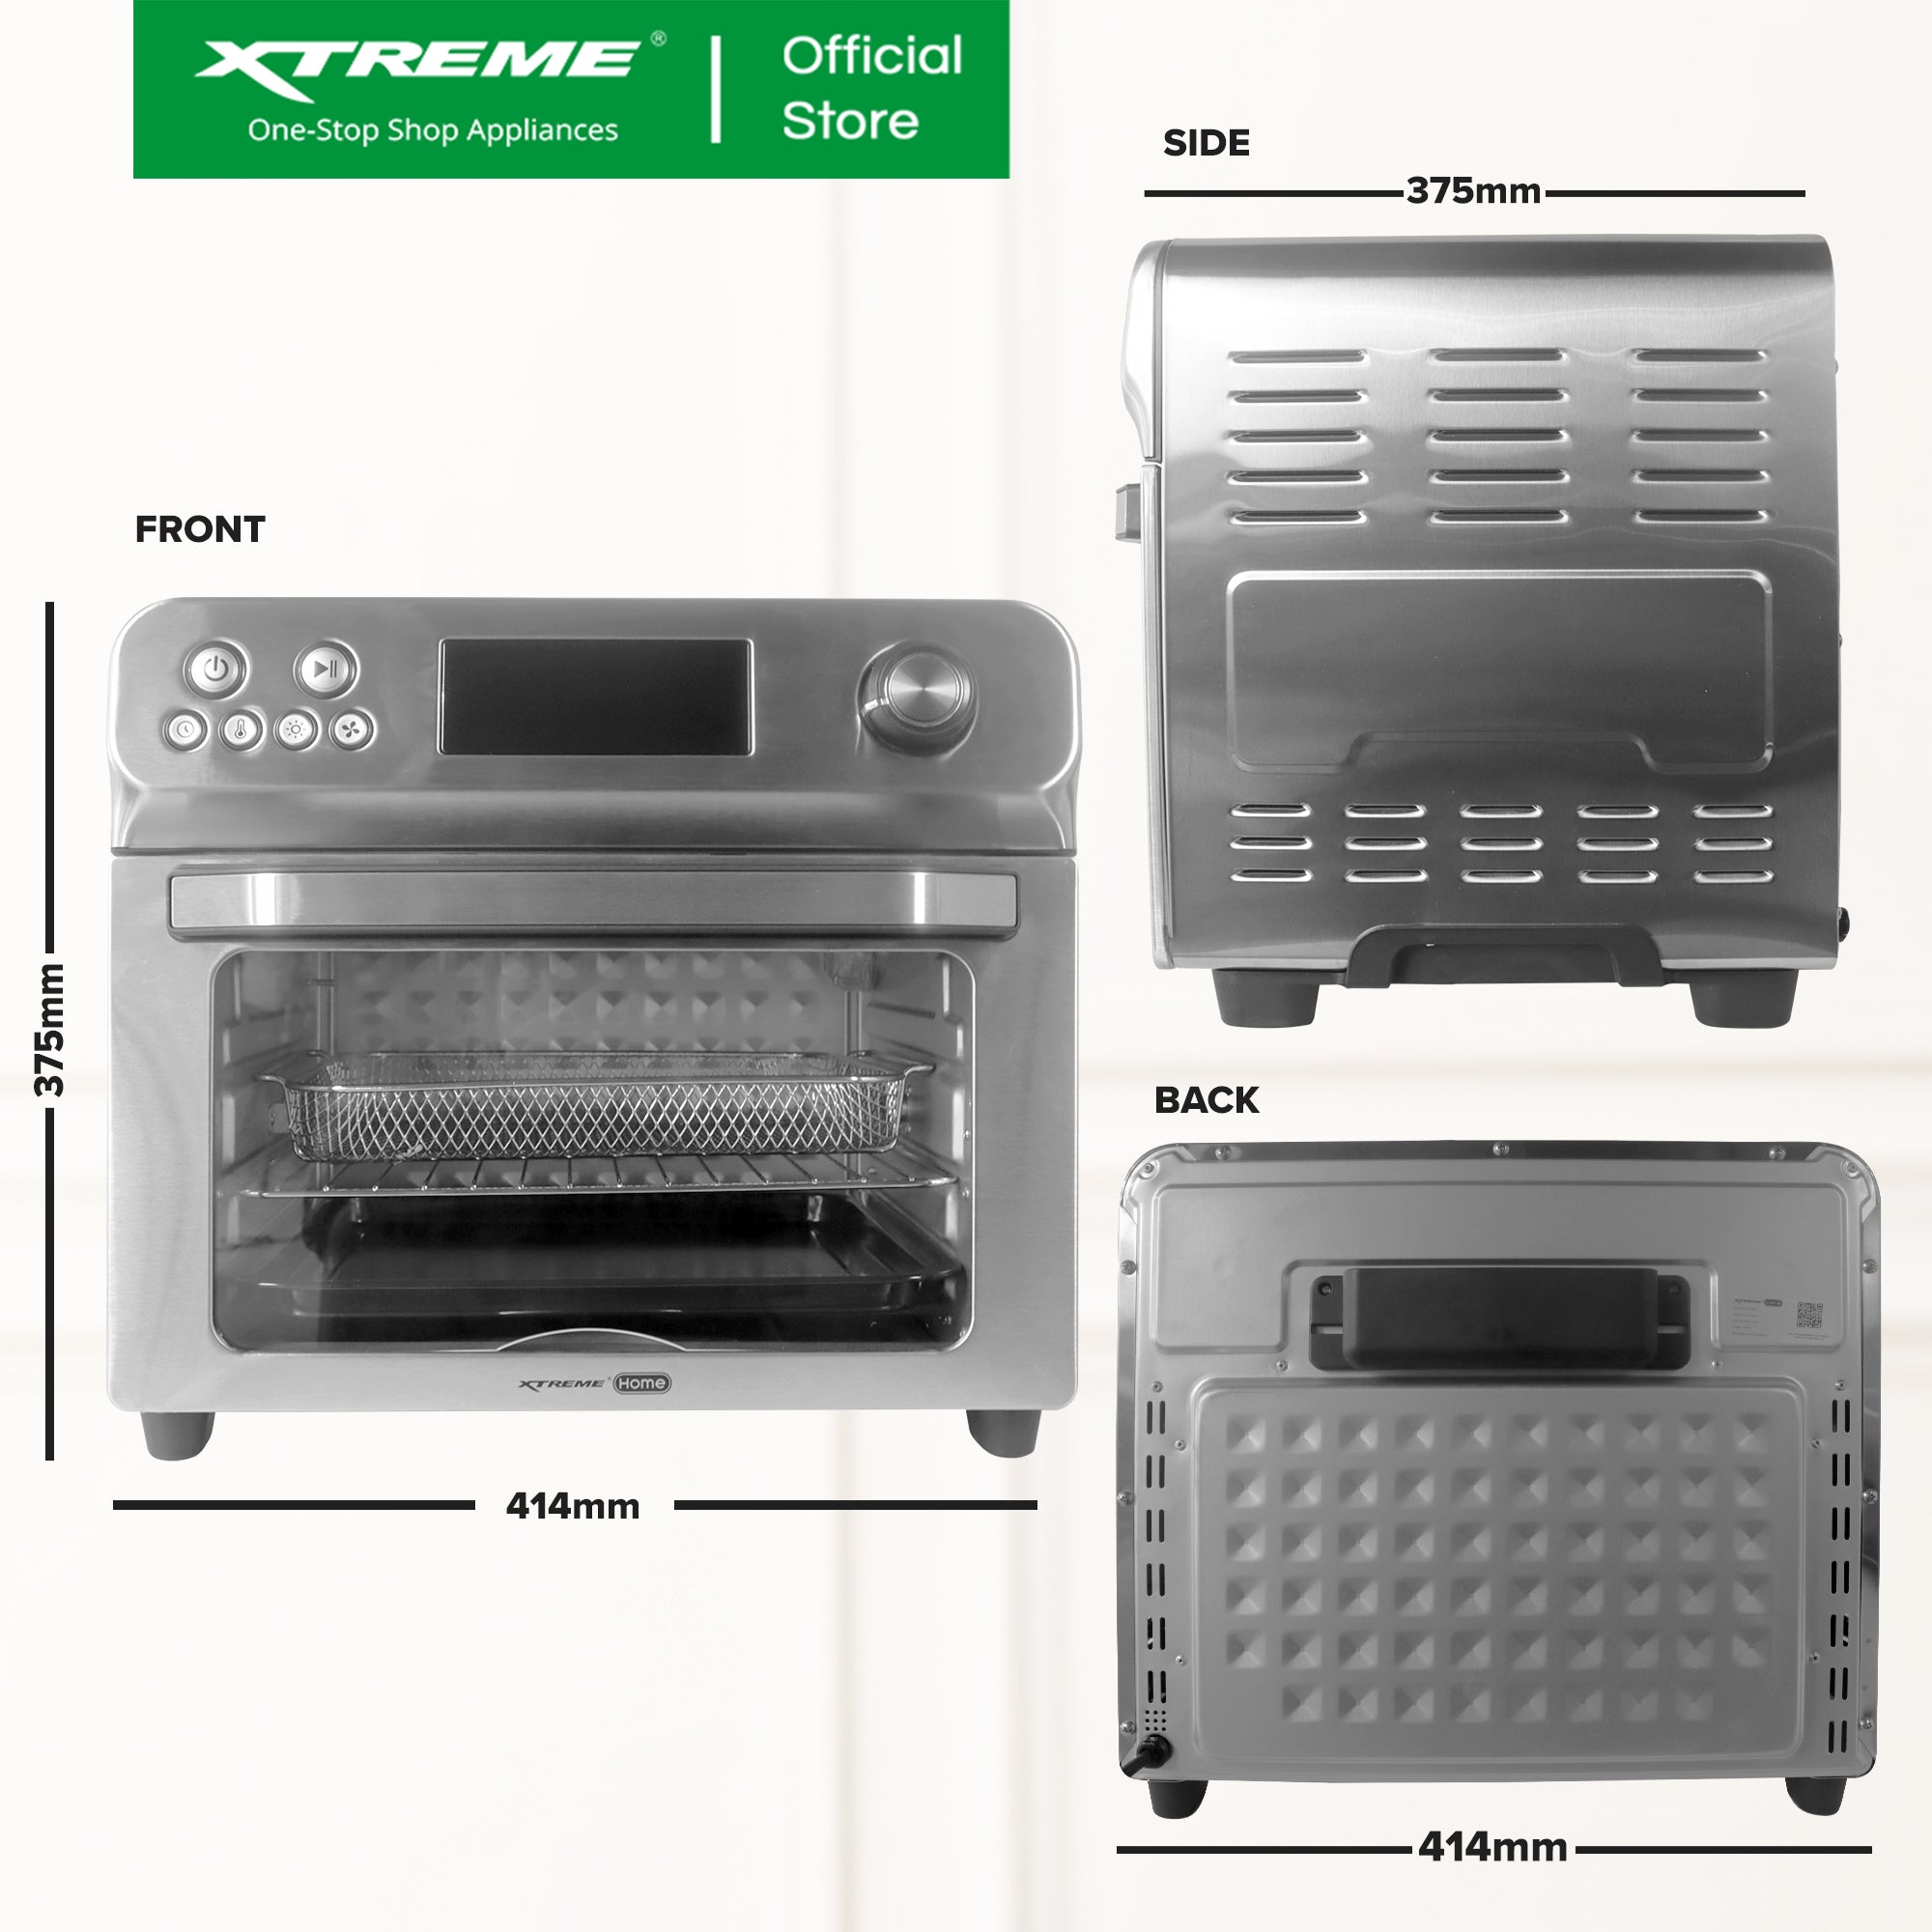 X-SERIES 24L Digital Air Fryer Digital Control with LED Display | XH-AFO24LX